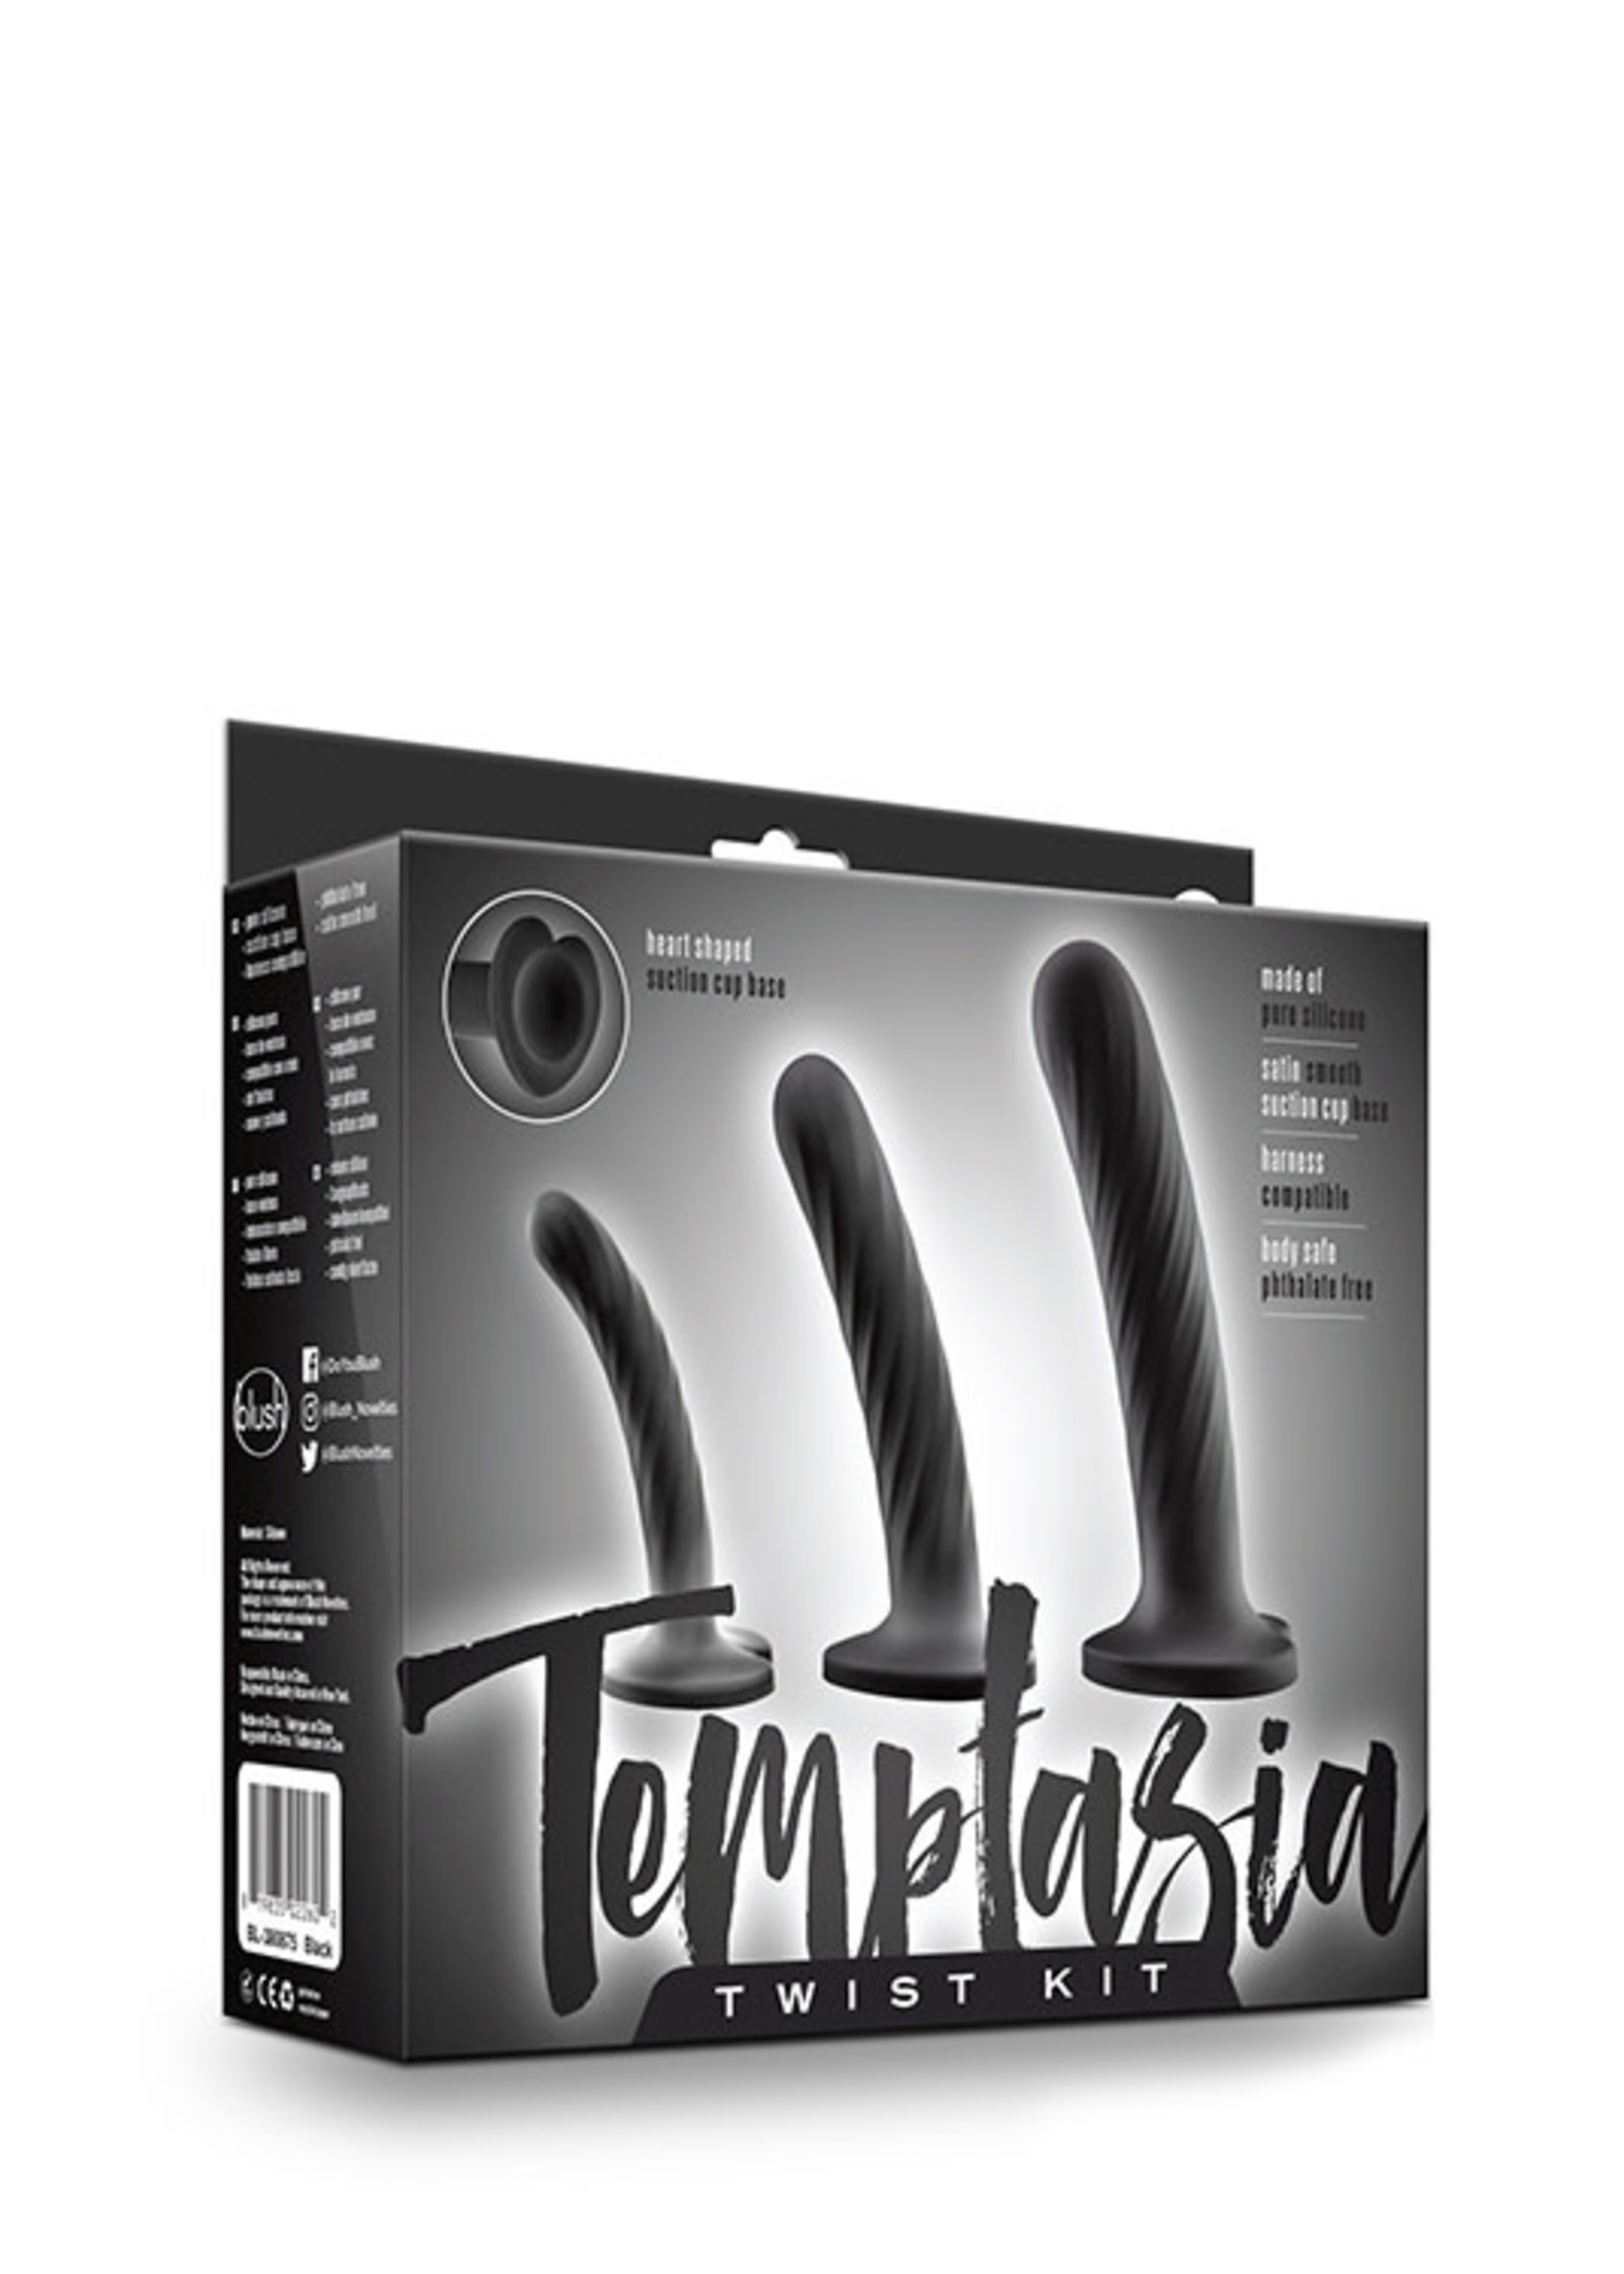 Blush Temptasia twist kit set of three black